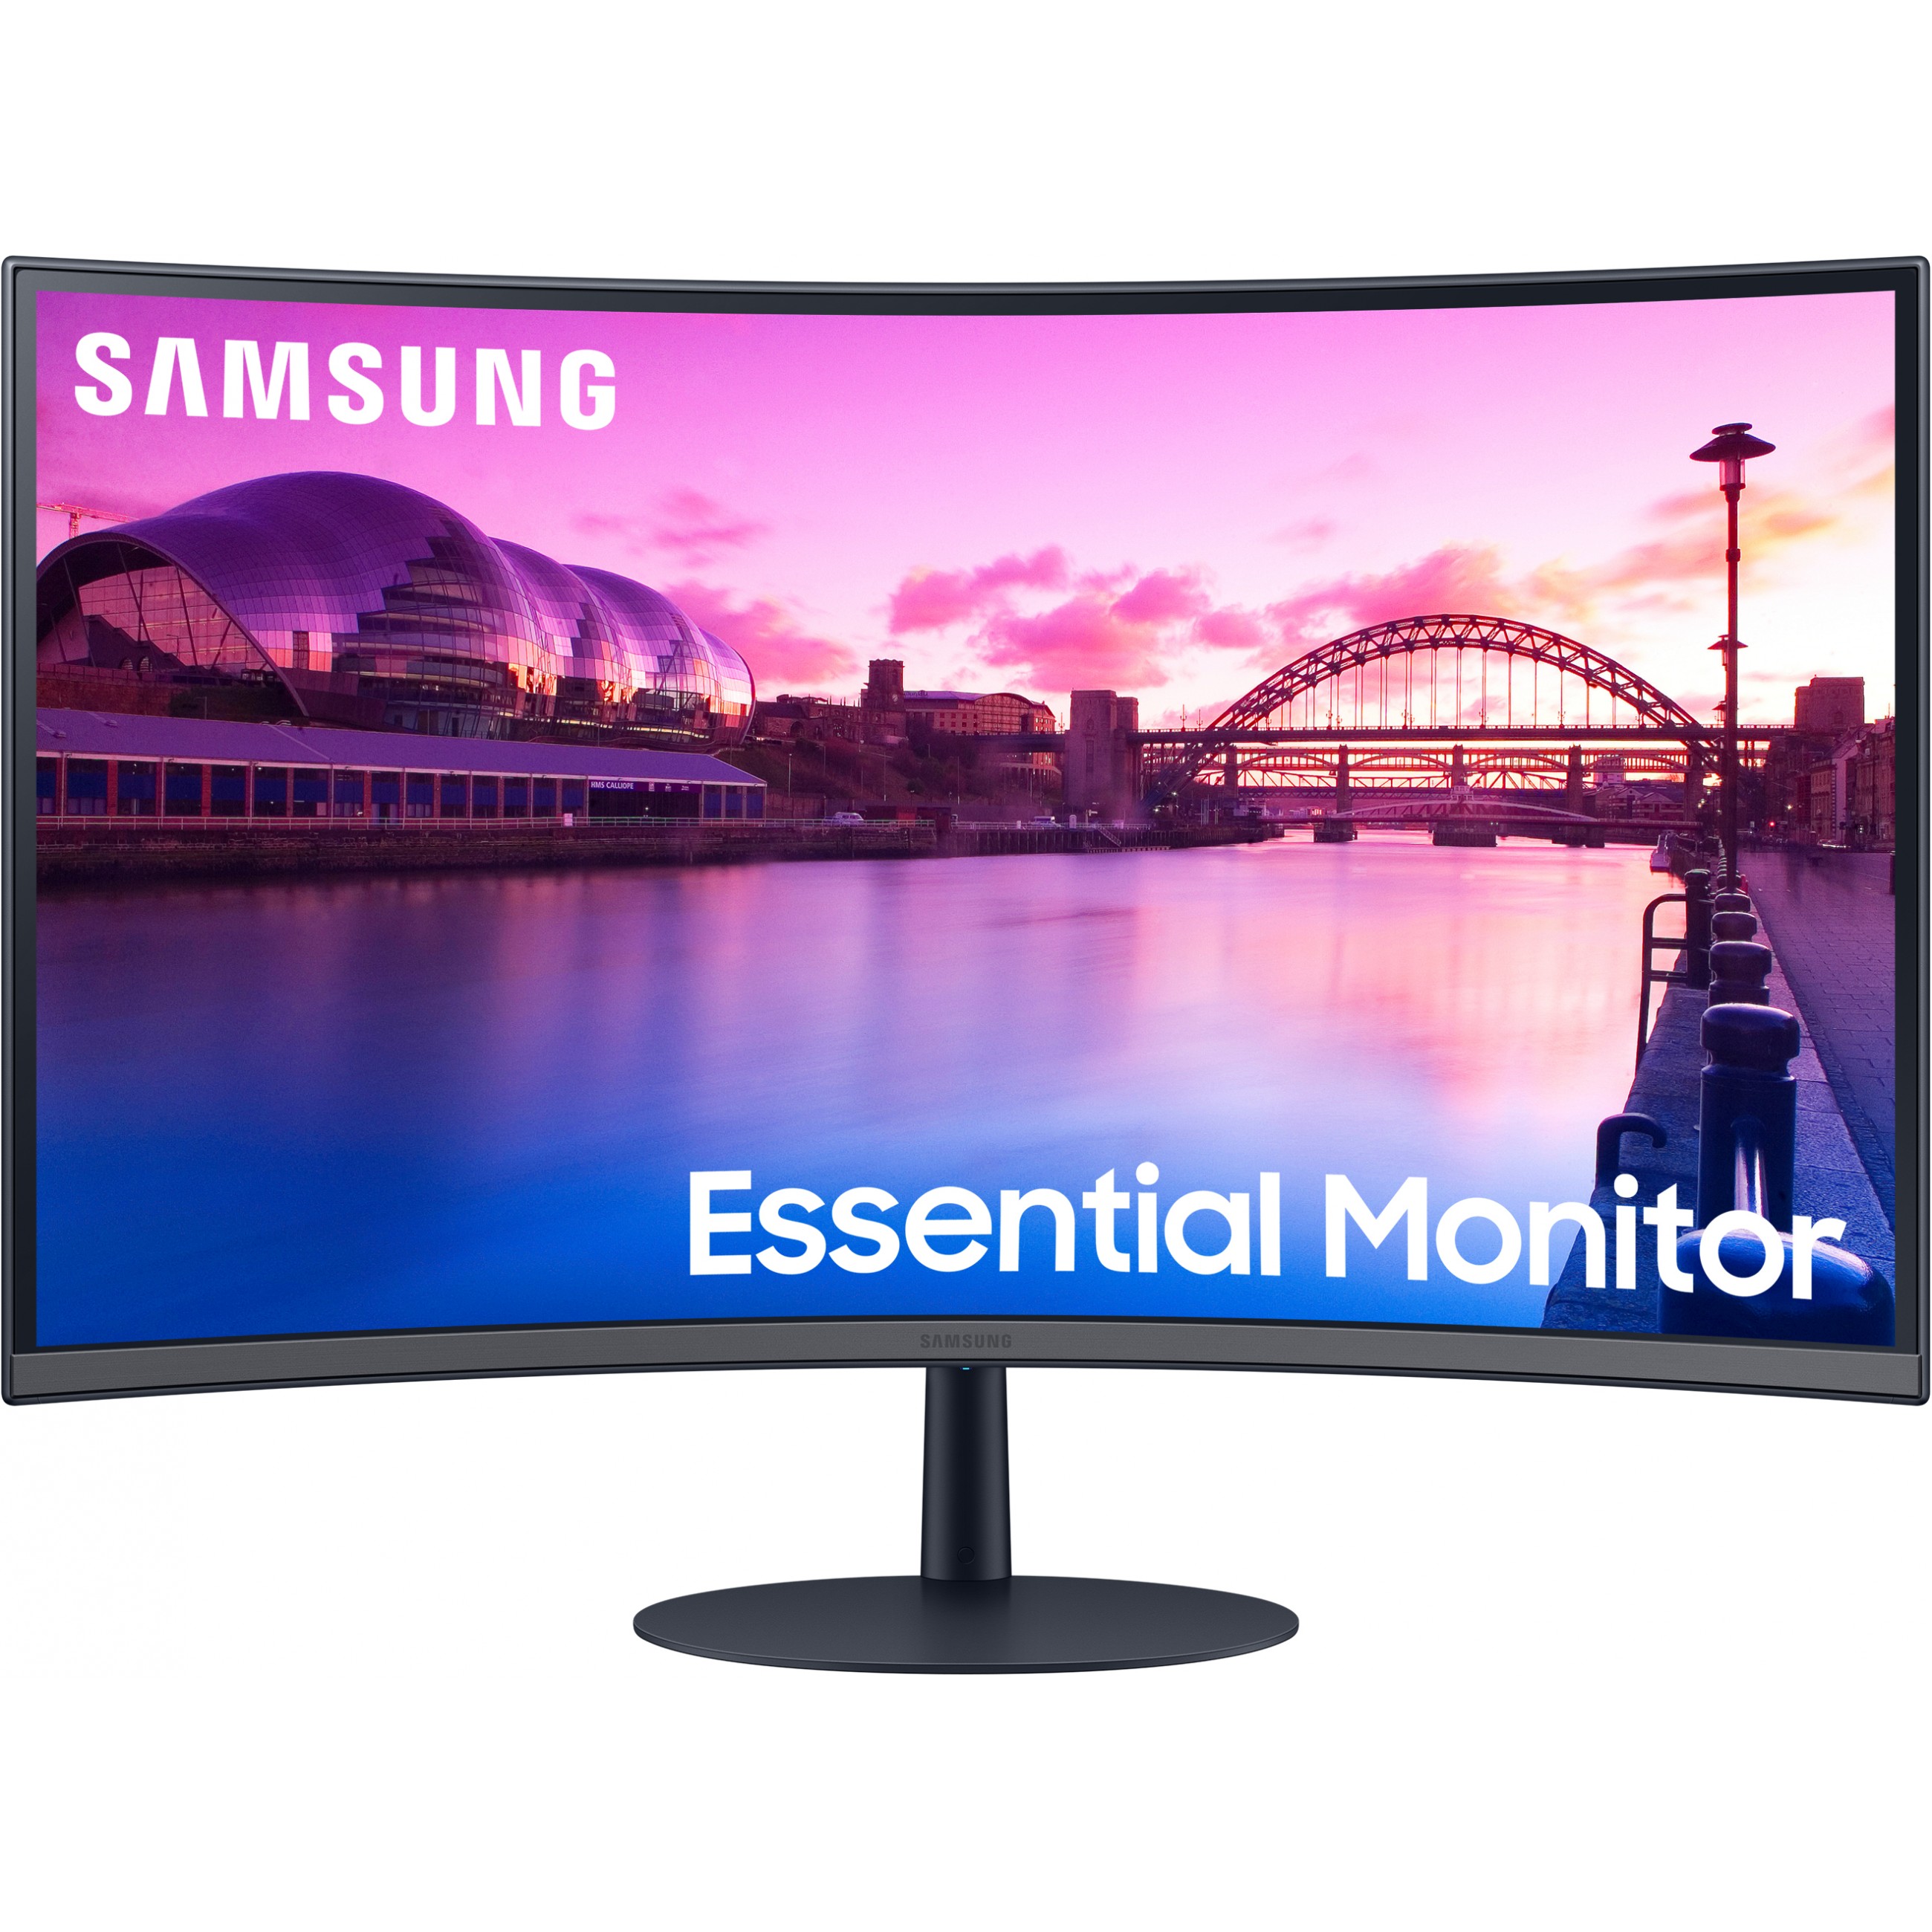 Samsung Essential Monitor S39C LED display